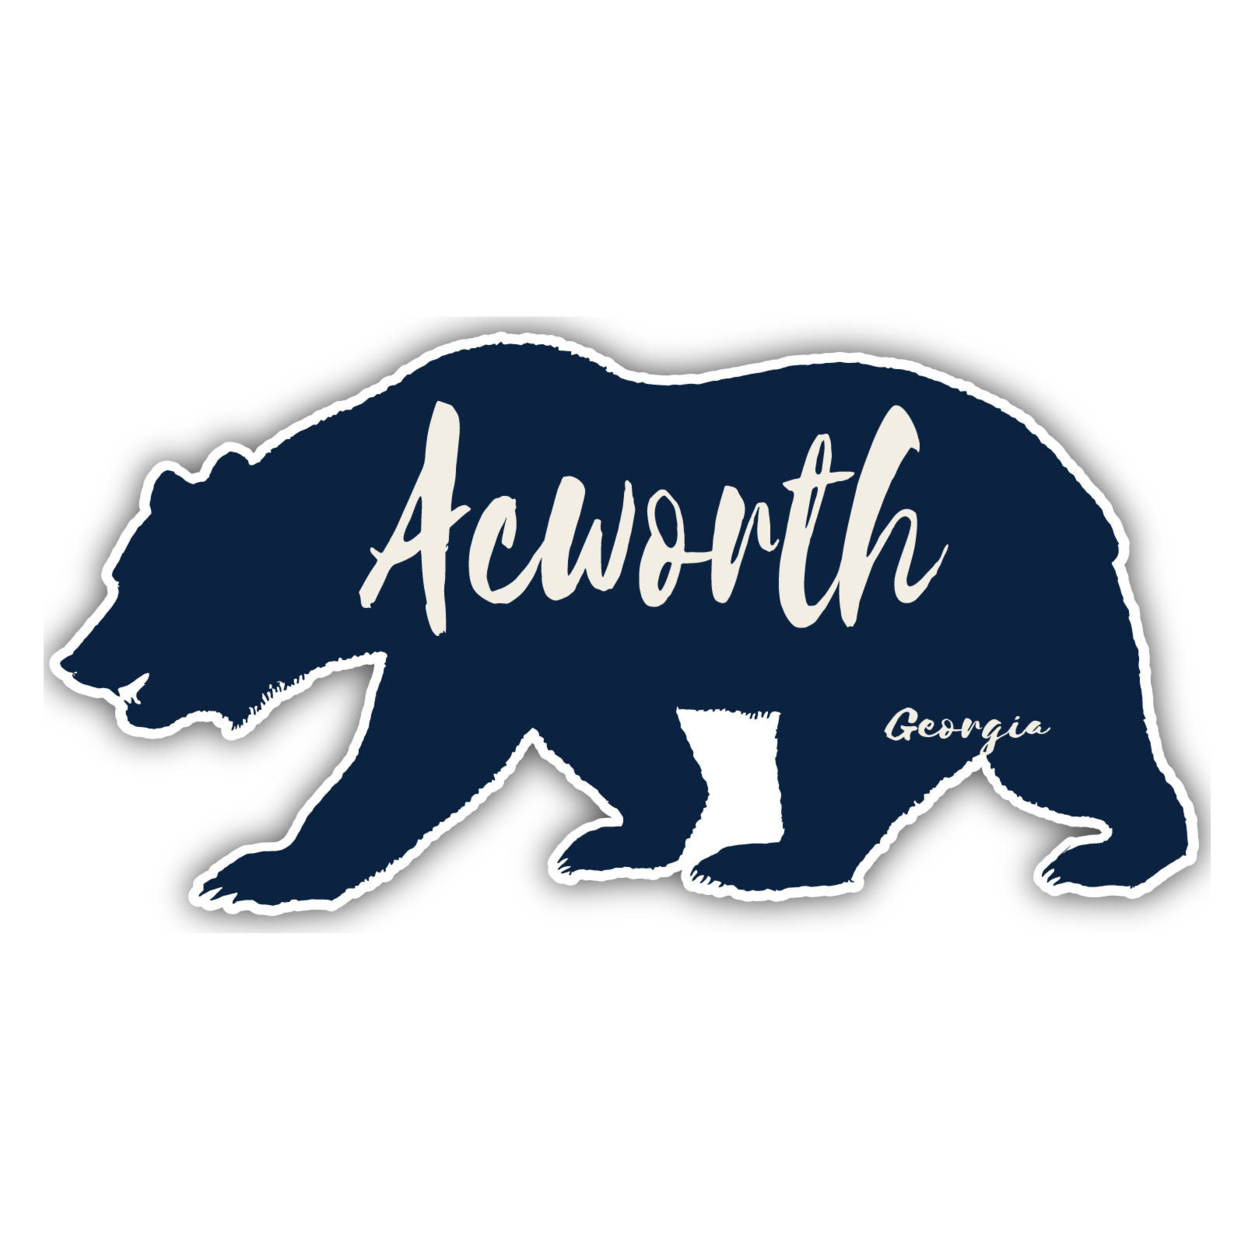 Acworth Georgia Souvenir Decorative Stickers (Choose Theme And Size) - Single Unit, 10-Inch, Bear